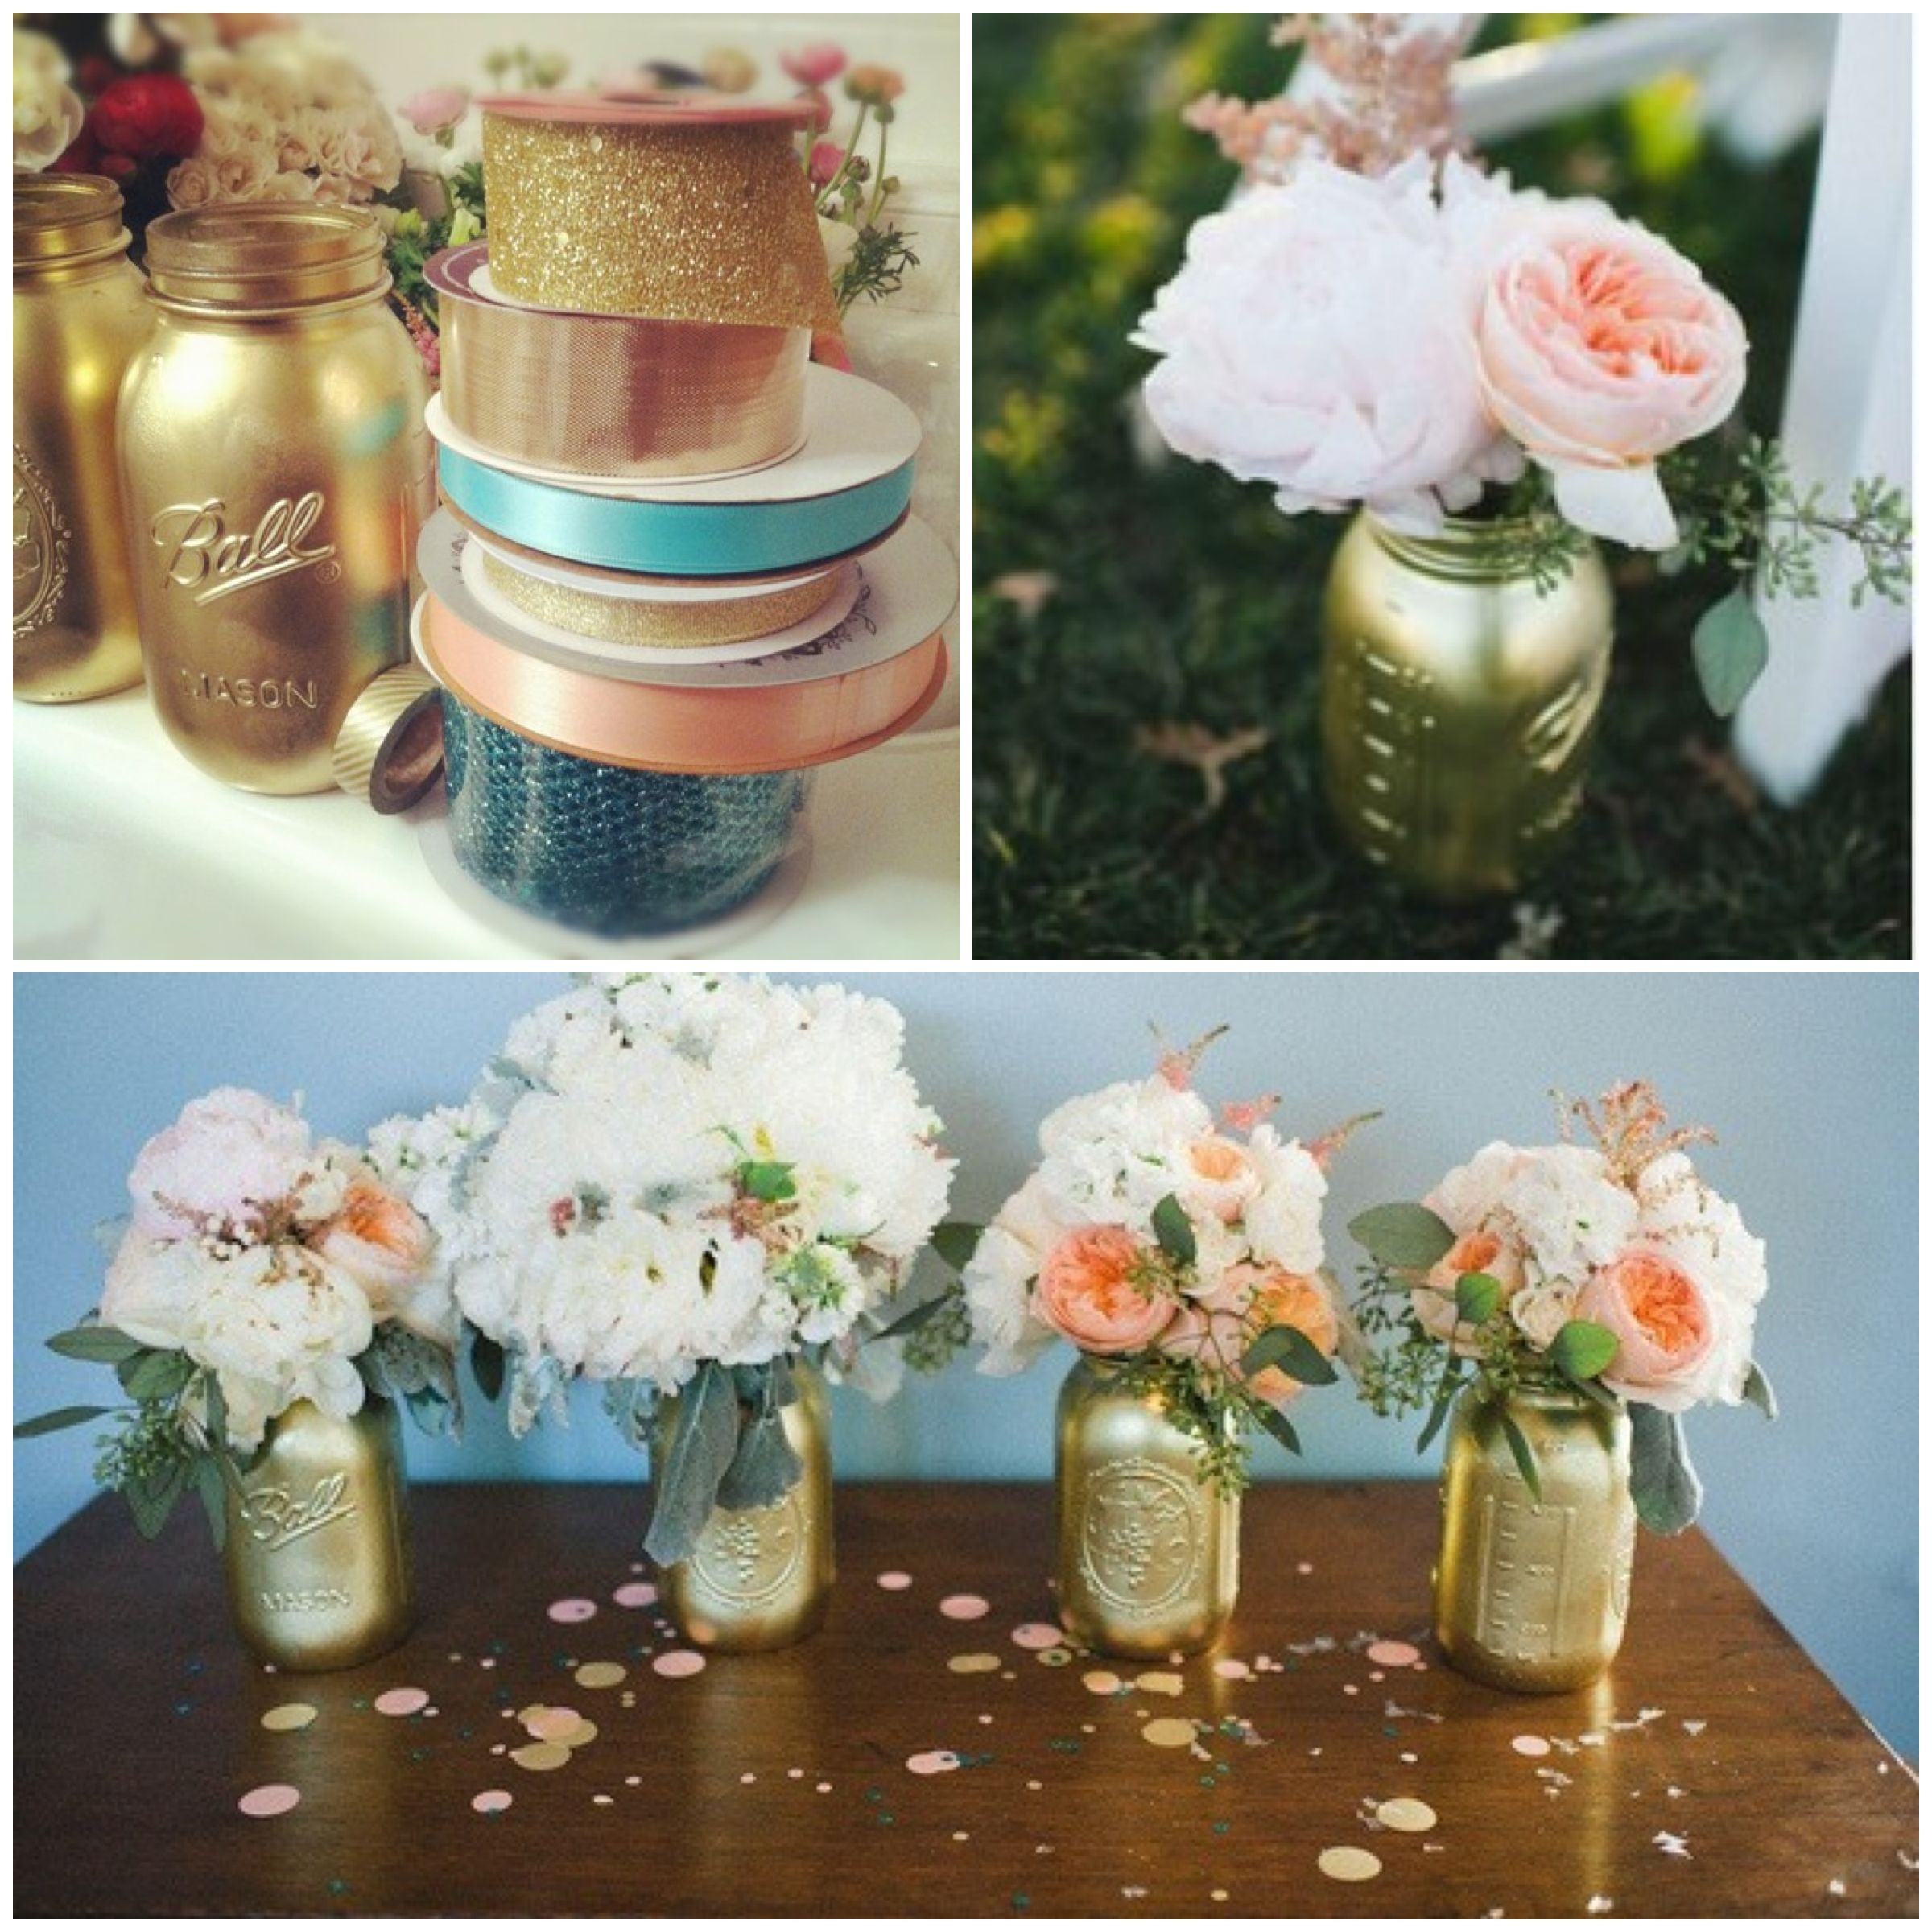 DIY Wedding Centerpieces Without Flowers
 DIY Gold Mason Jars